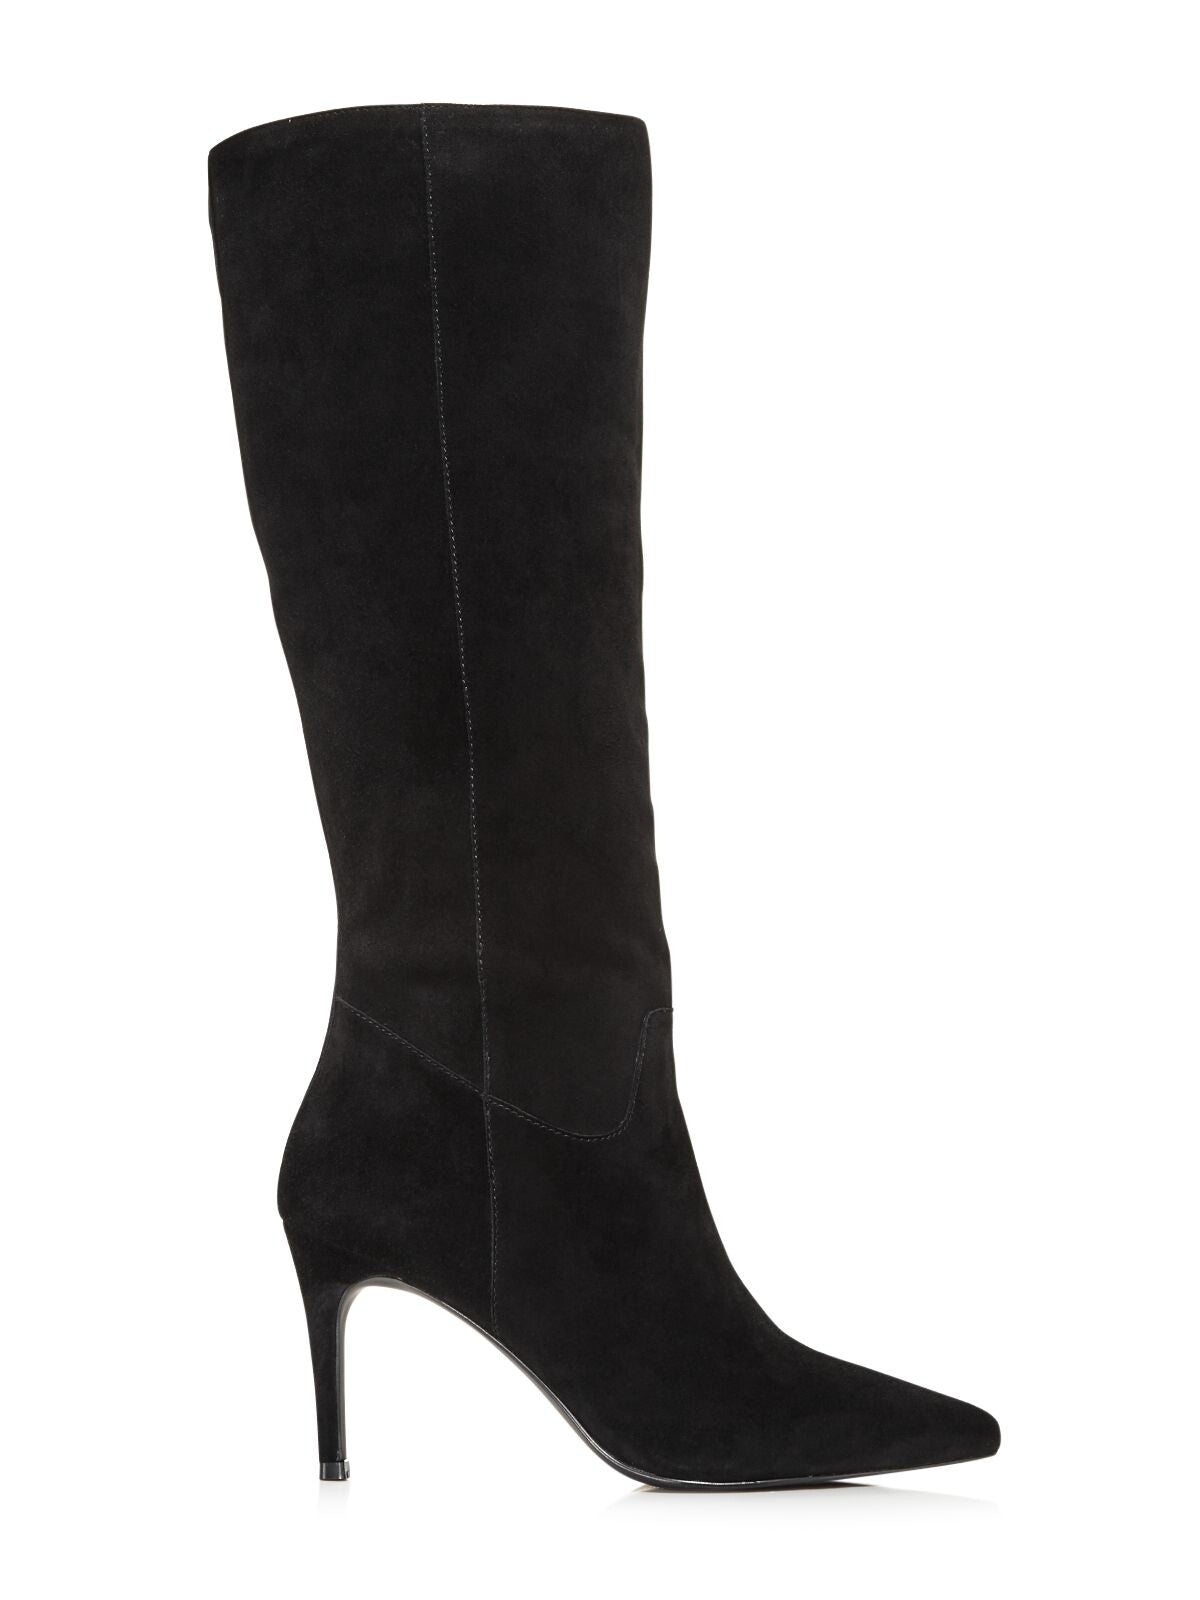 AQUA Womens Black Padded Lenni Pointed Toe Stiletto Leather Boots Shoes 6 M